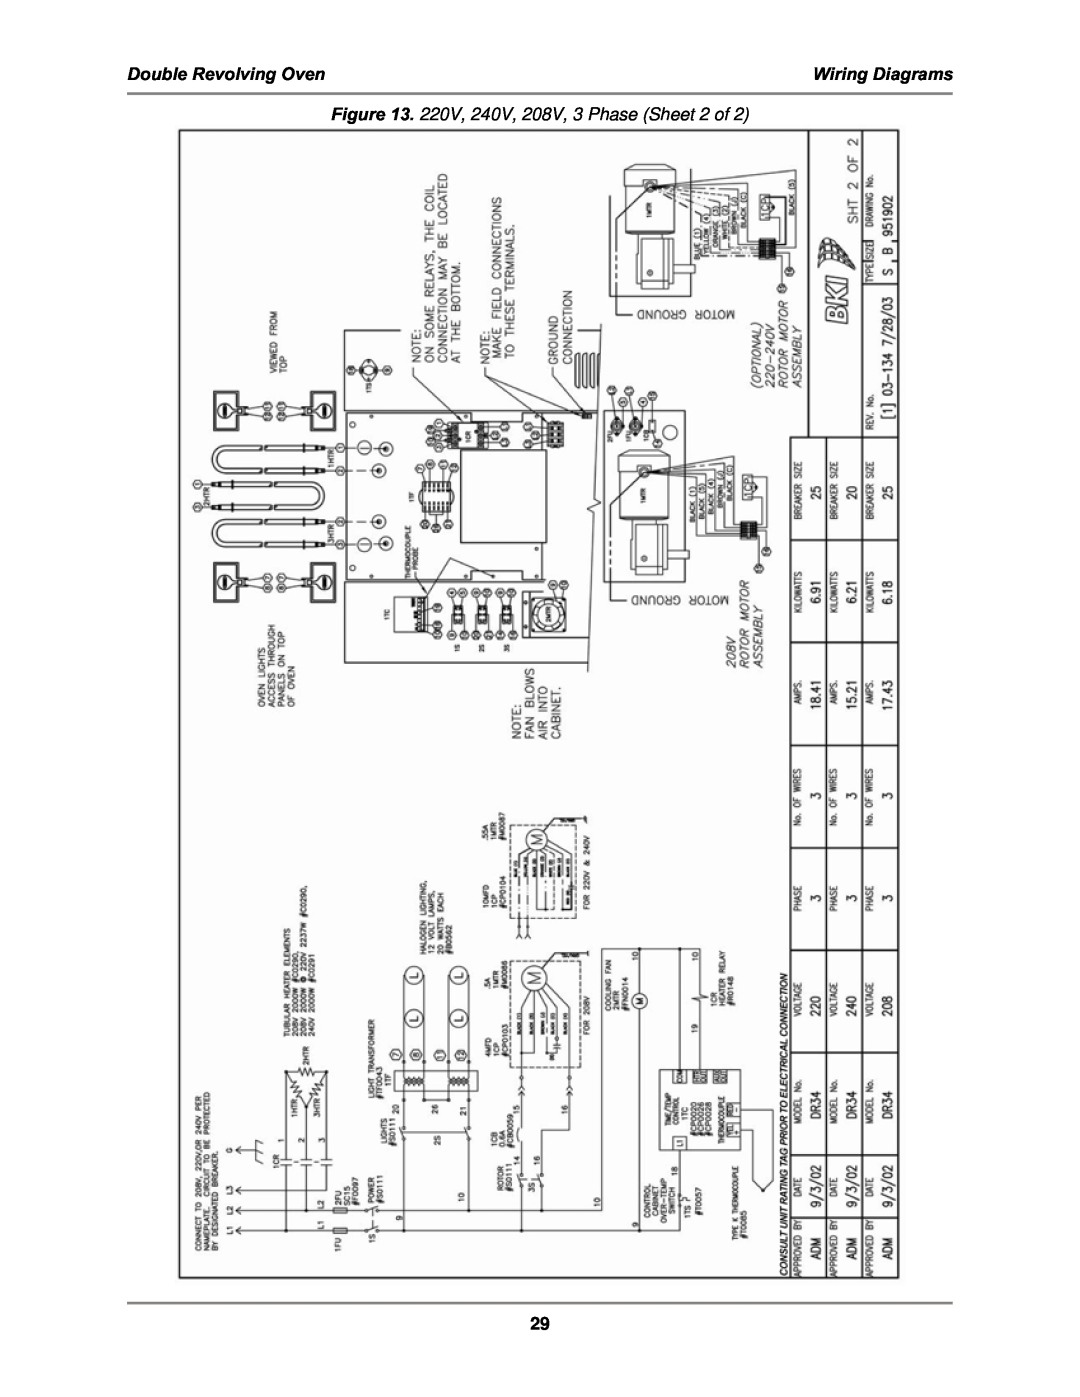 Bakers Pride Oven DR-34 service manual Double Revolving Oven, Wiring Diagrams, 220V, 240V, 208V, 3 Phase Sheet 2 of 